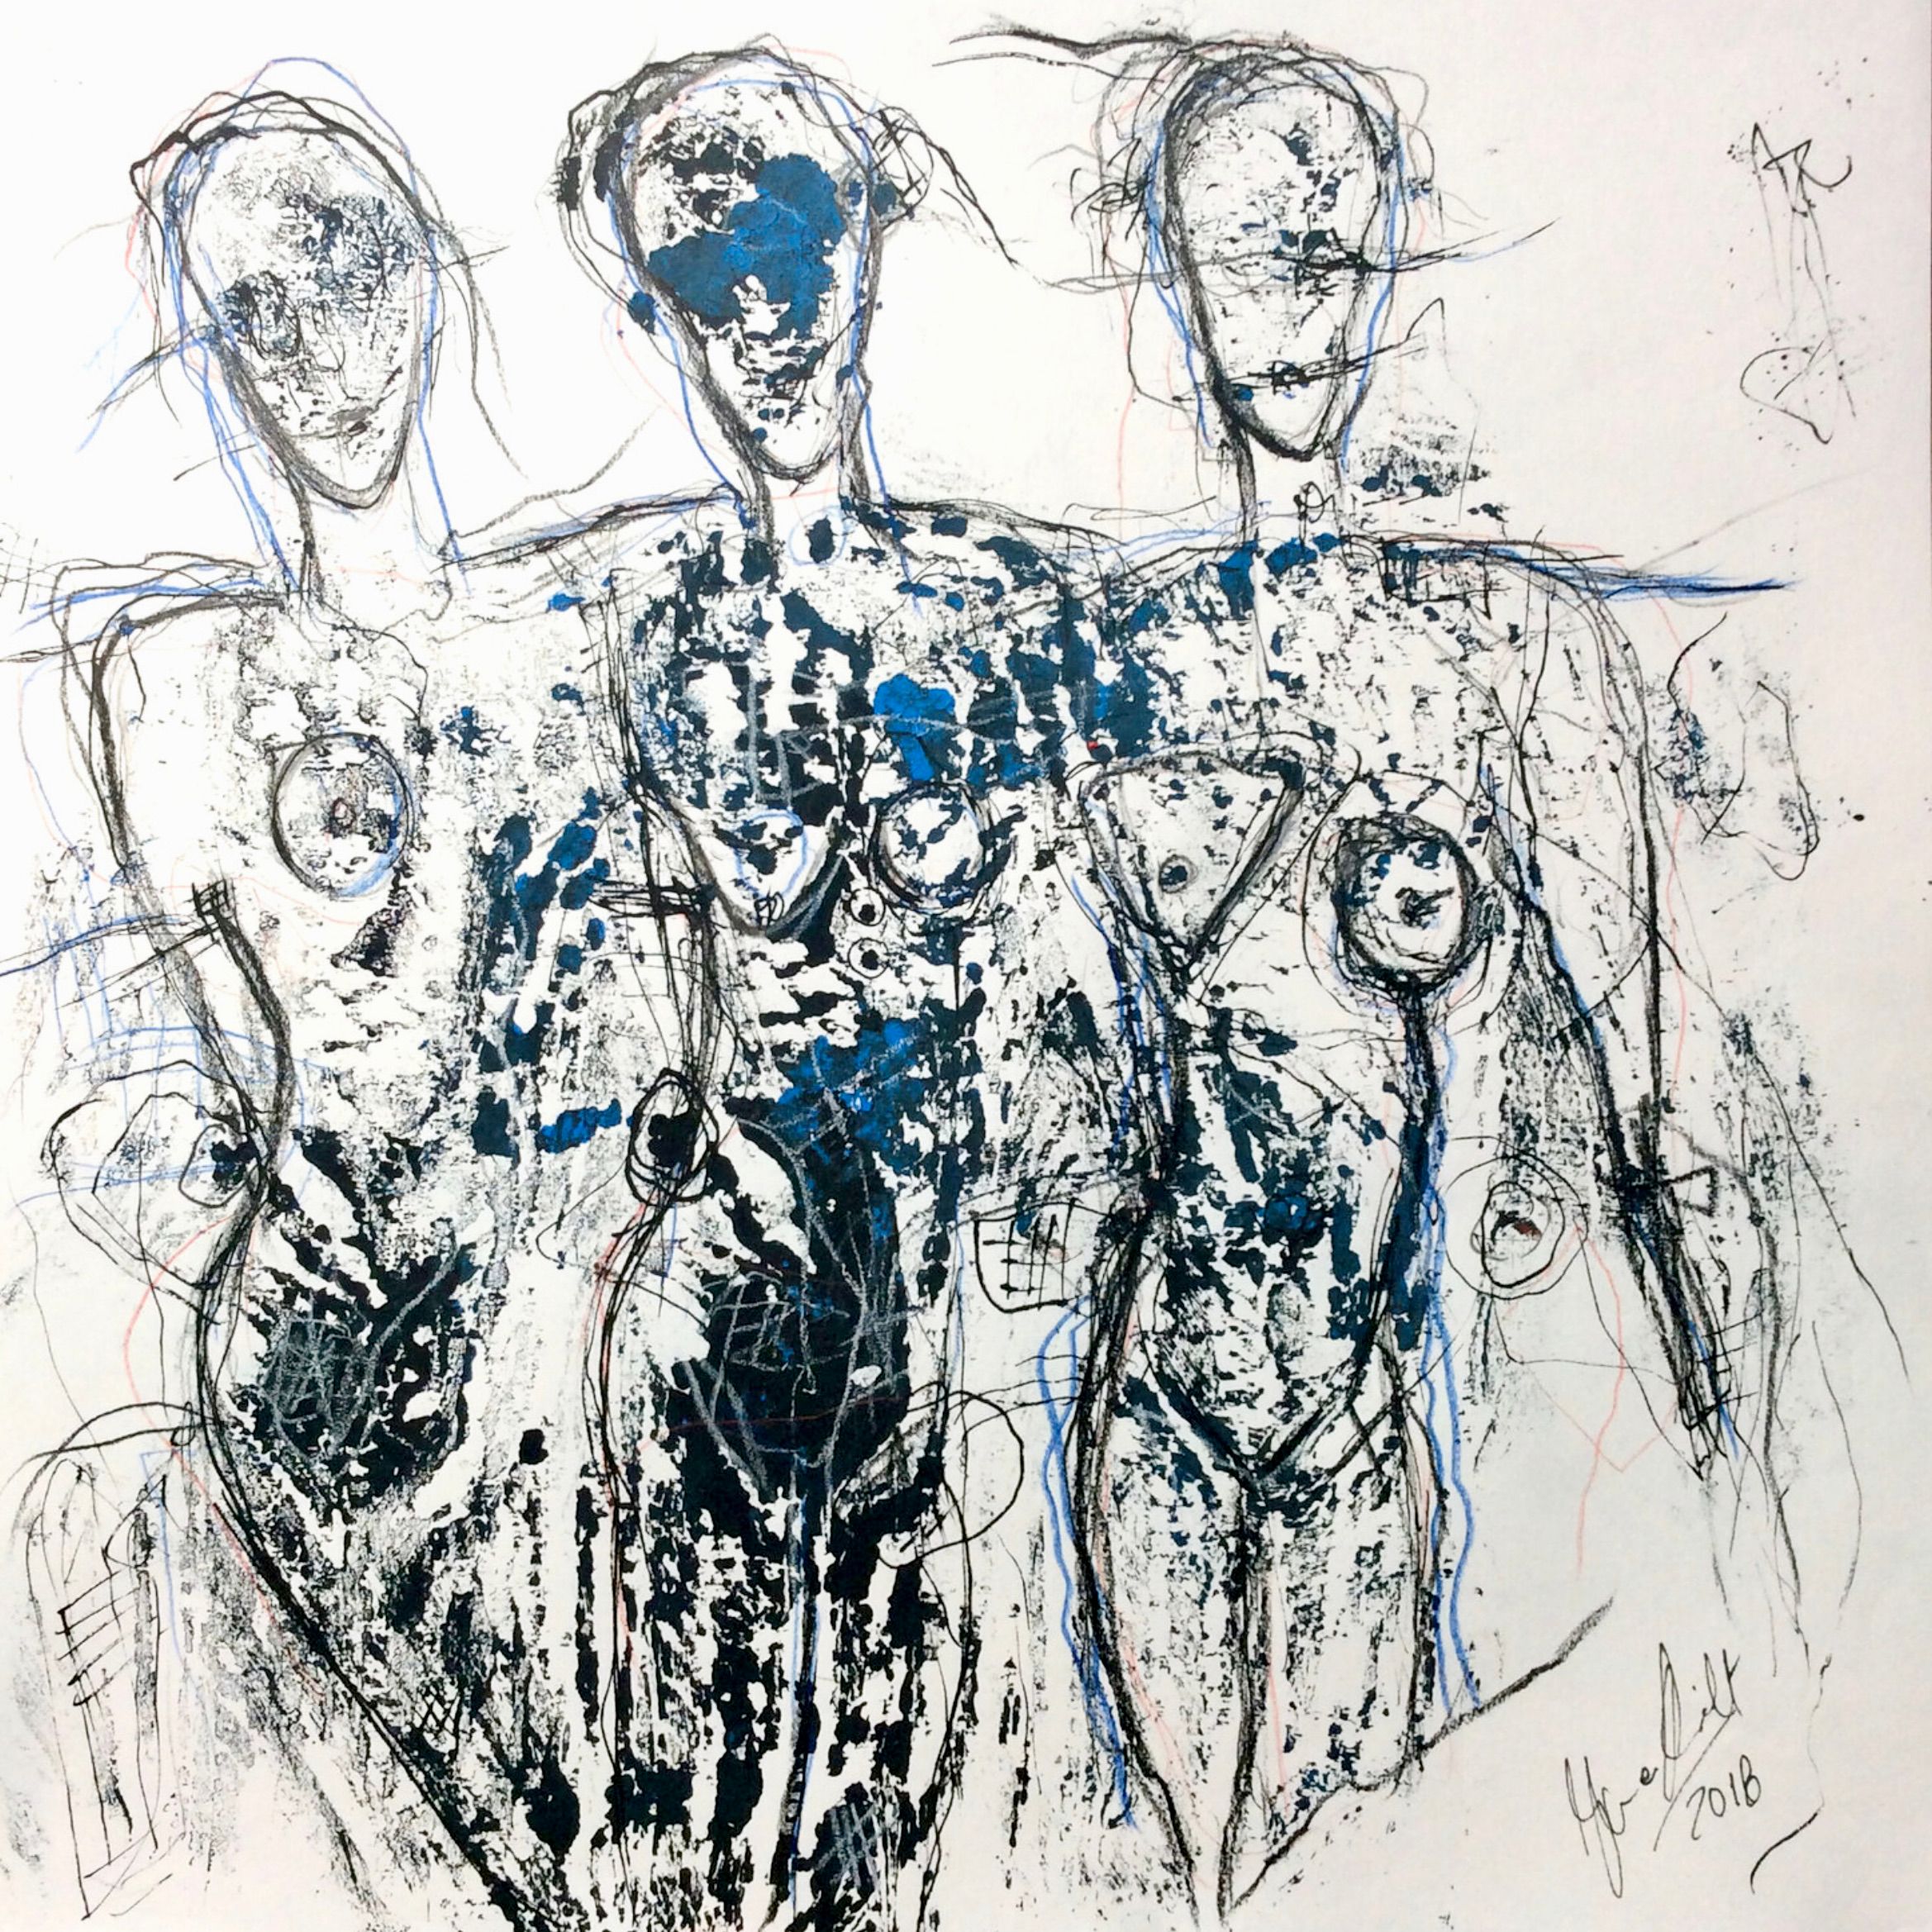 Ilona Schmidt的 "Monoprint No. 27 "半抽象的肖像画/素描展示了3个赤裸的女性身体。在这幅画中，黑色、白色和蓝色点缀的颜色占主导地位。